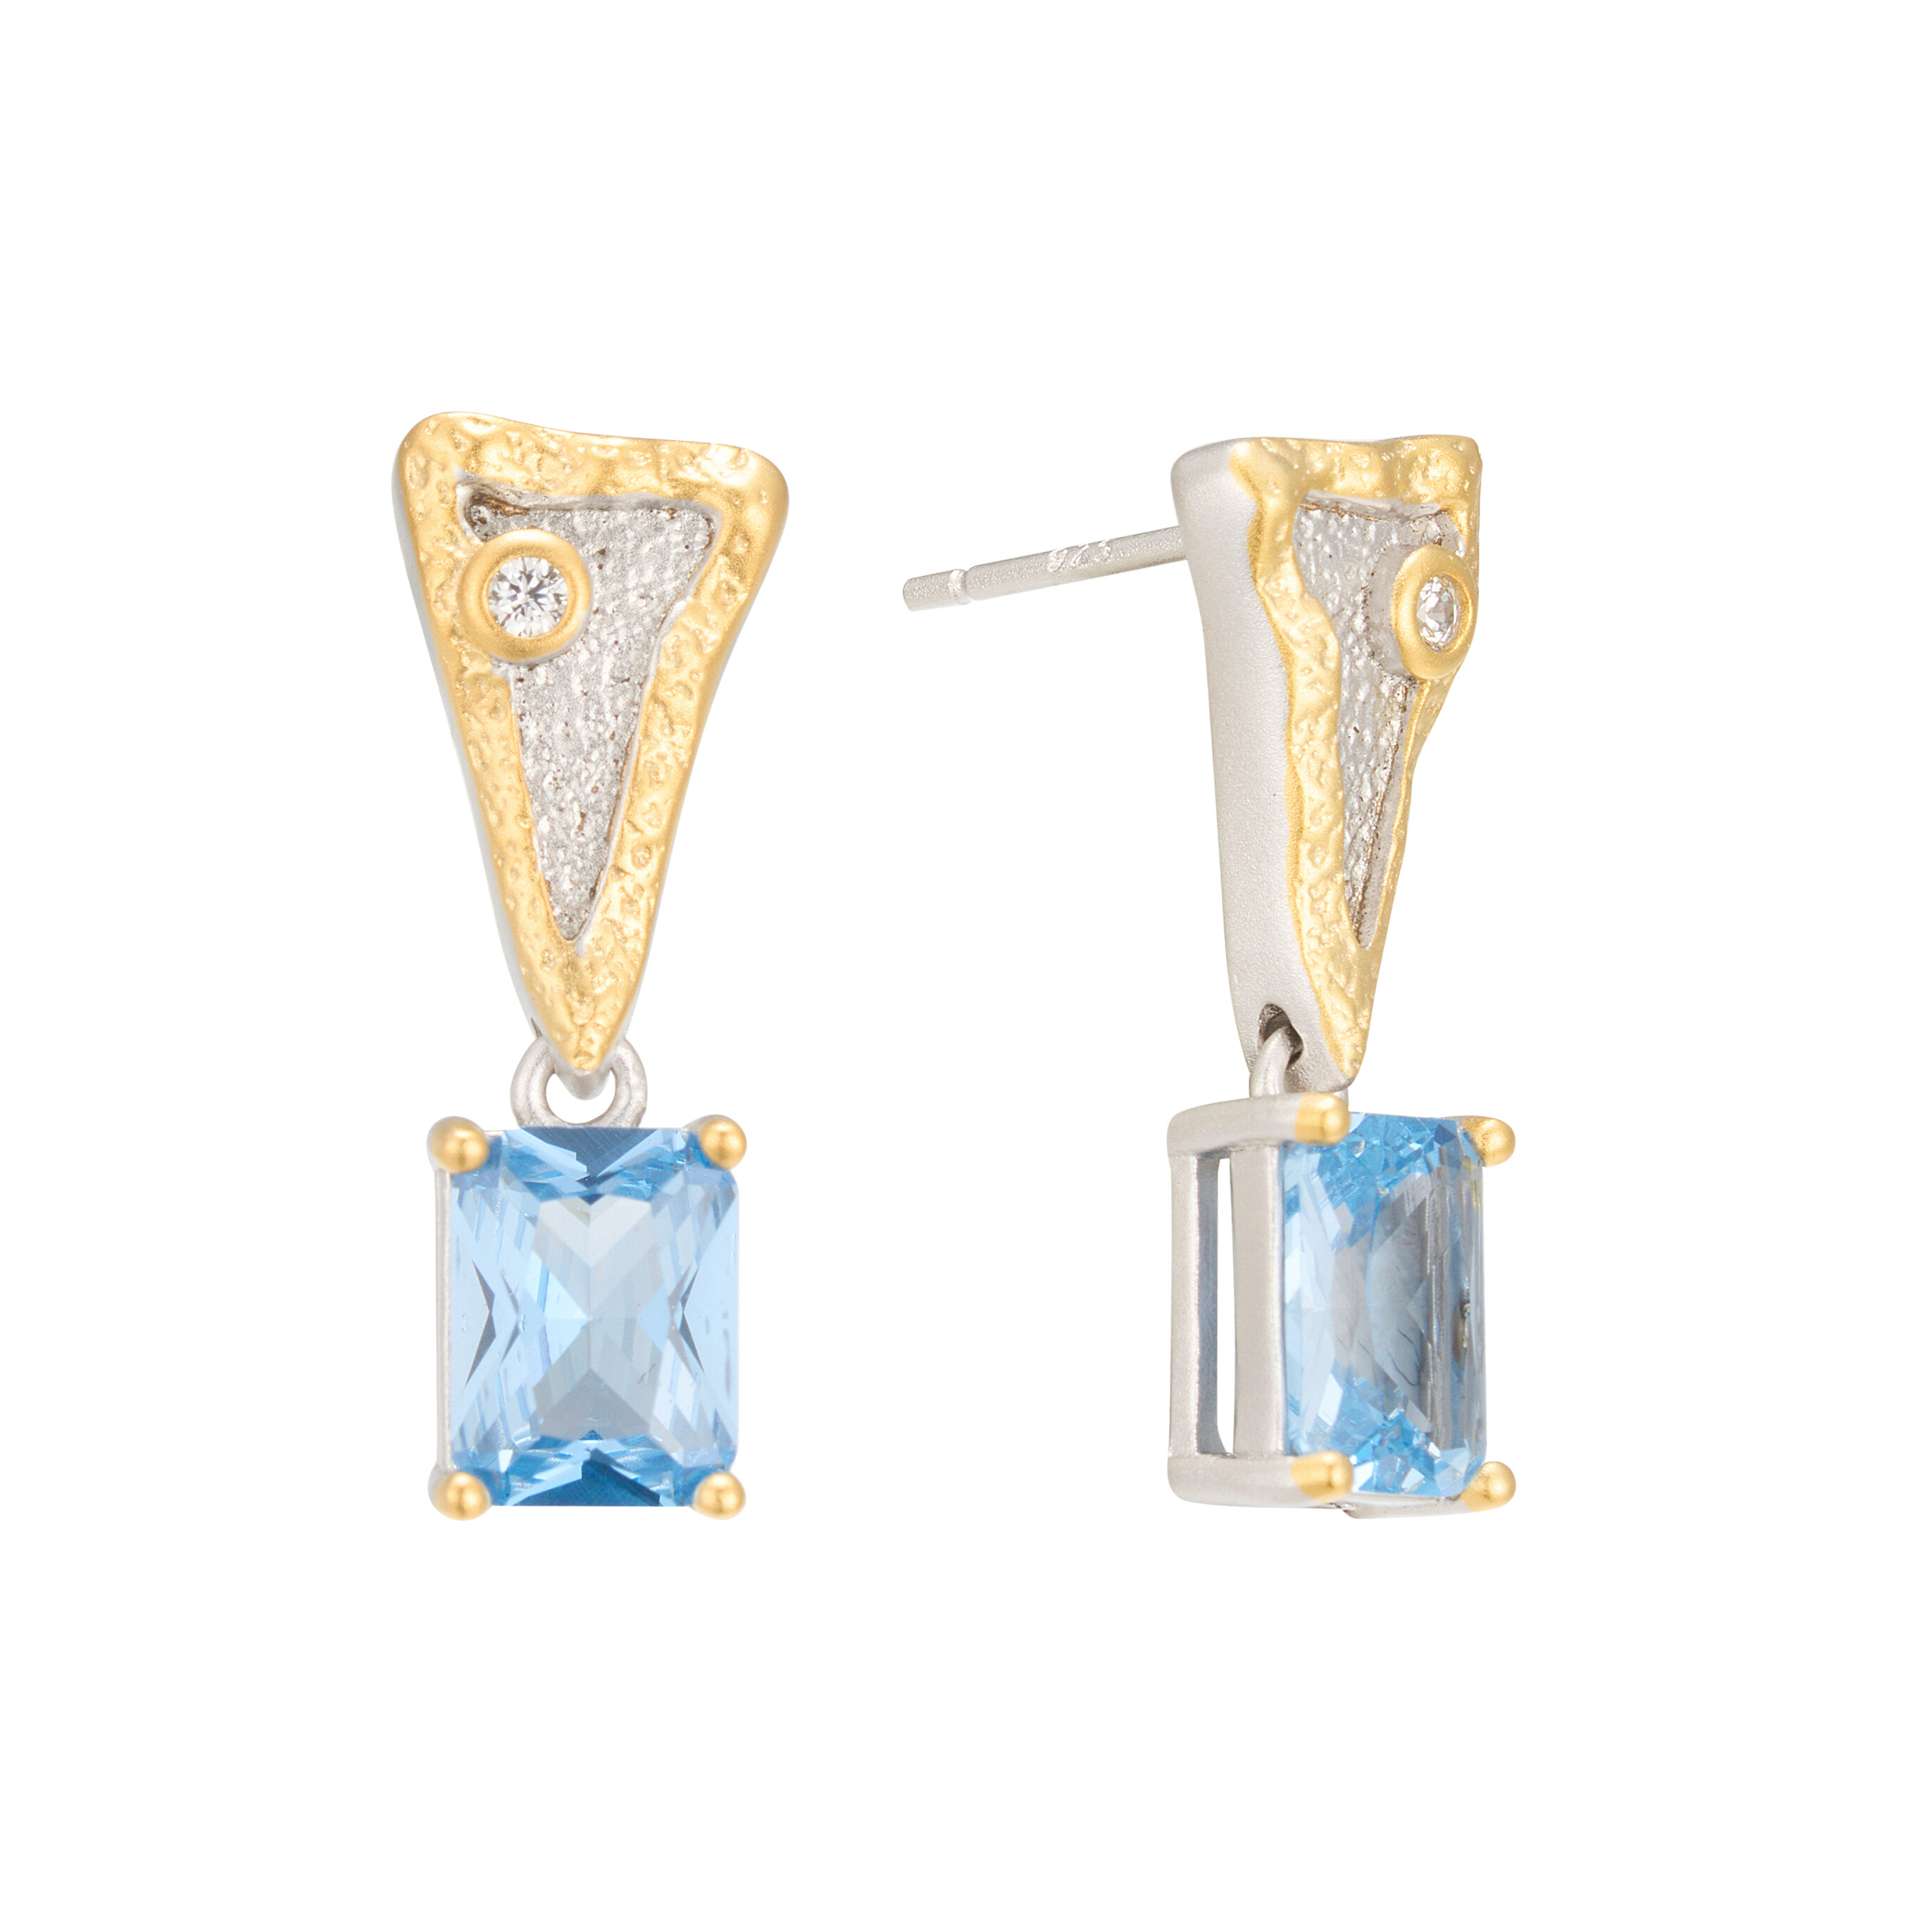 Handmade S925 Sterling Silver Inlaid Blue Spinel Earrings Luxury Jewelry